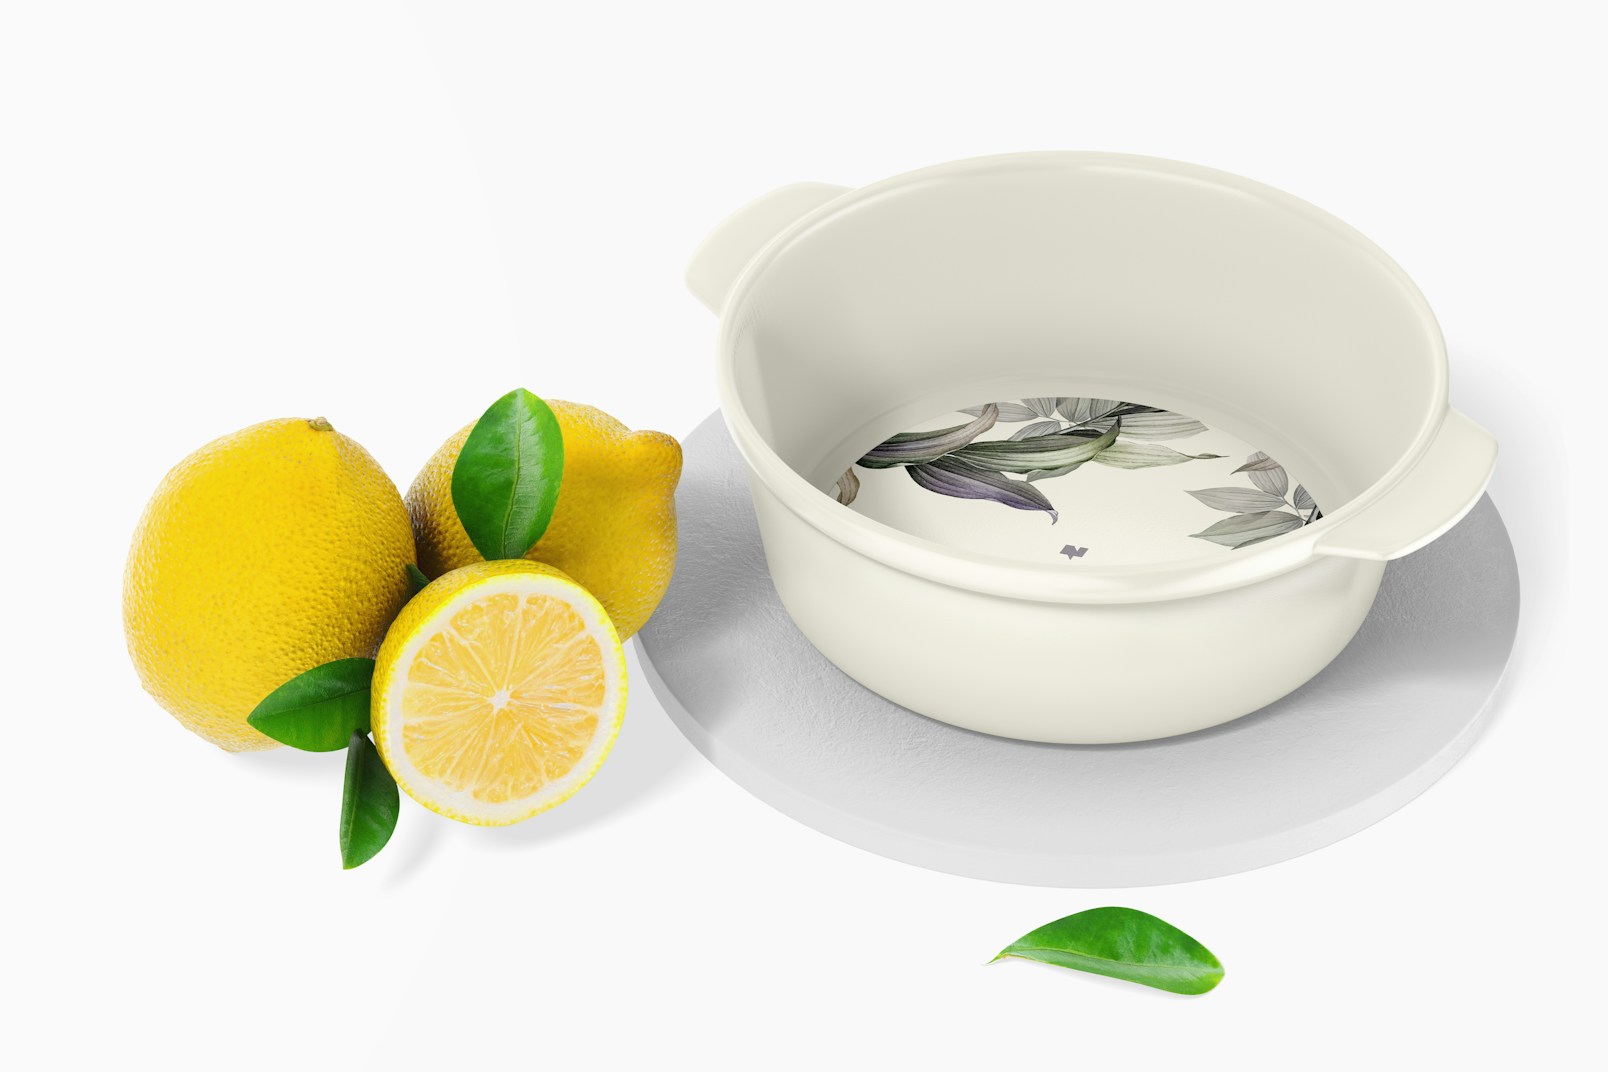 Round Ceramic Dish with Handles Mockup, with Lemons